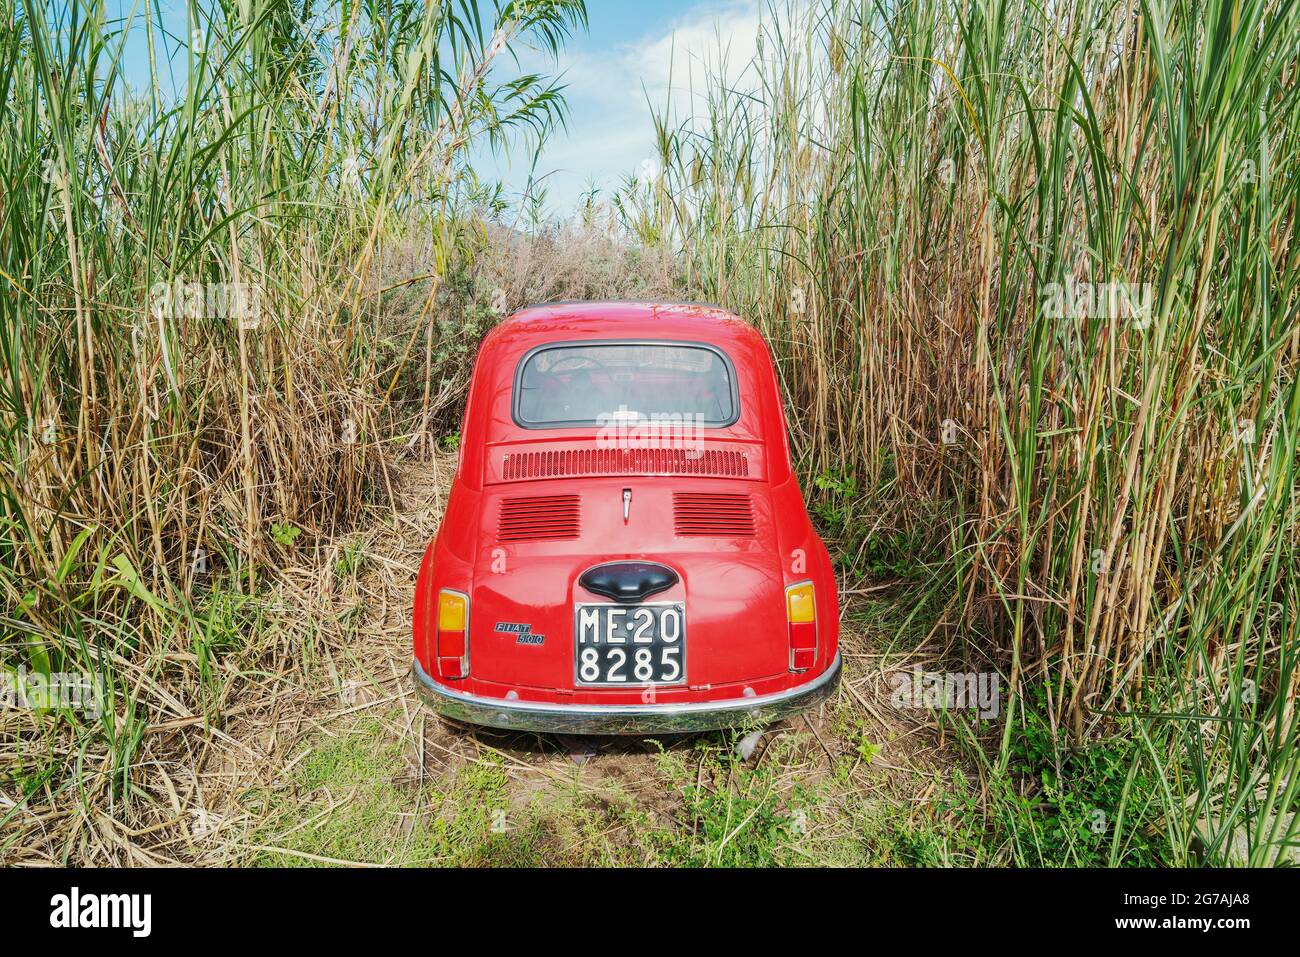 Macchina parcheggiata tra erba lunga, Lipari, Isole Eolie, in Sicilia, Italia Foto Stock